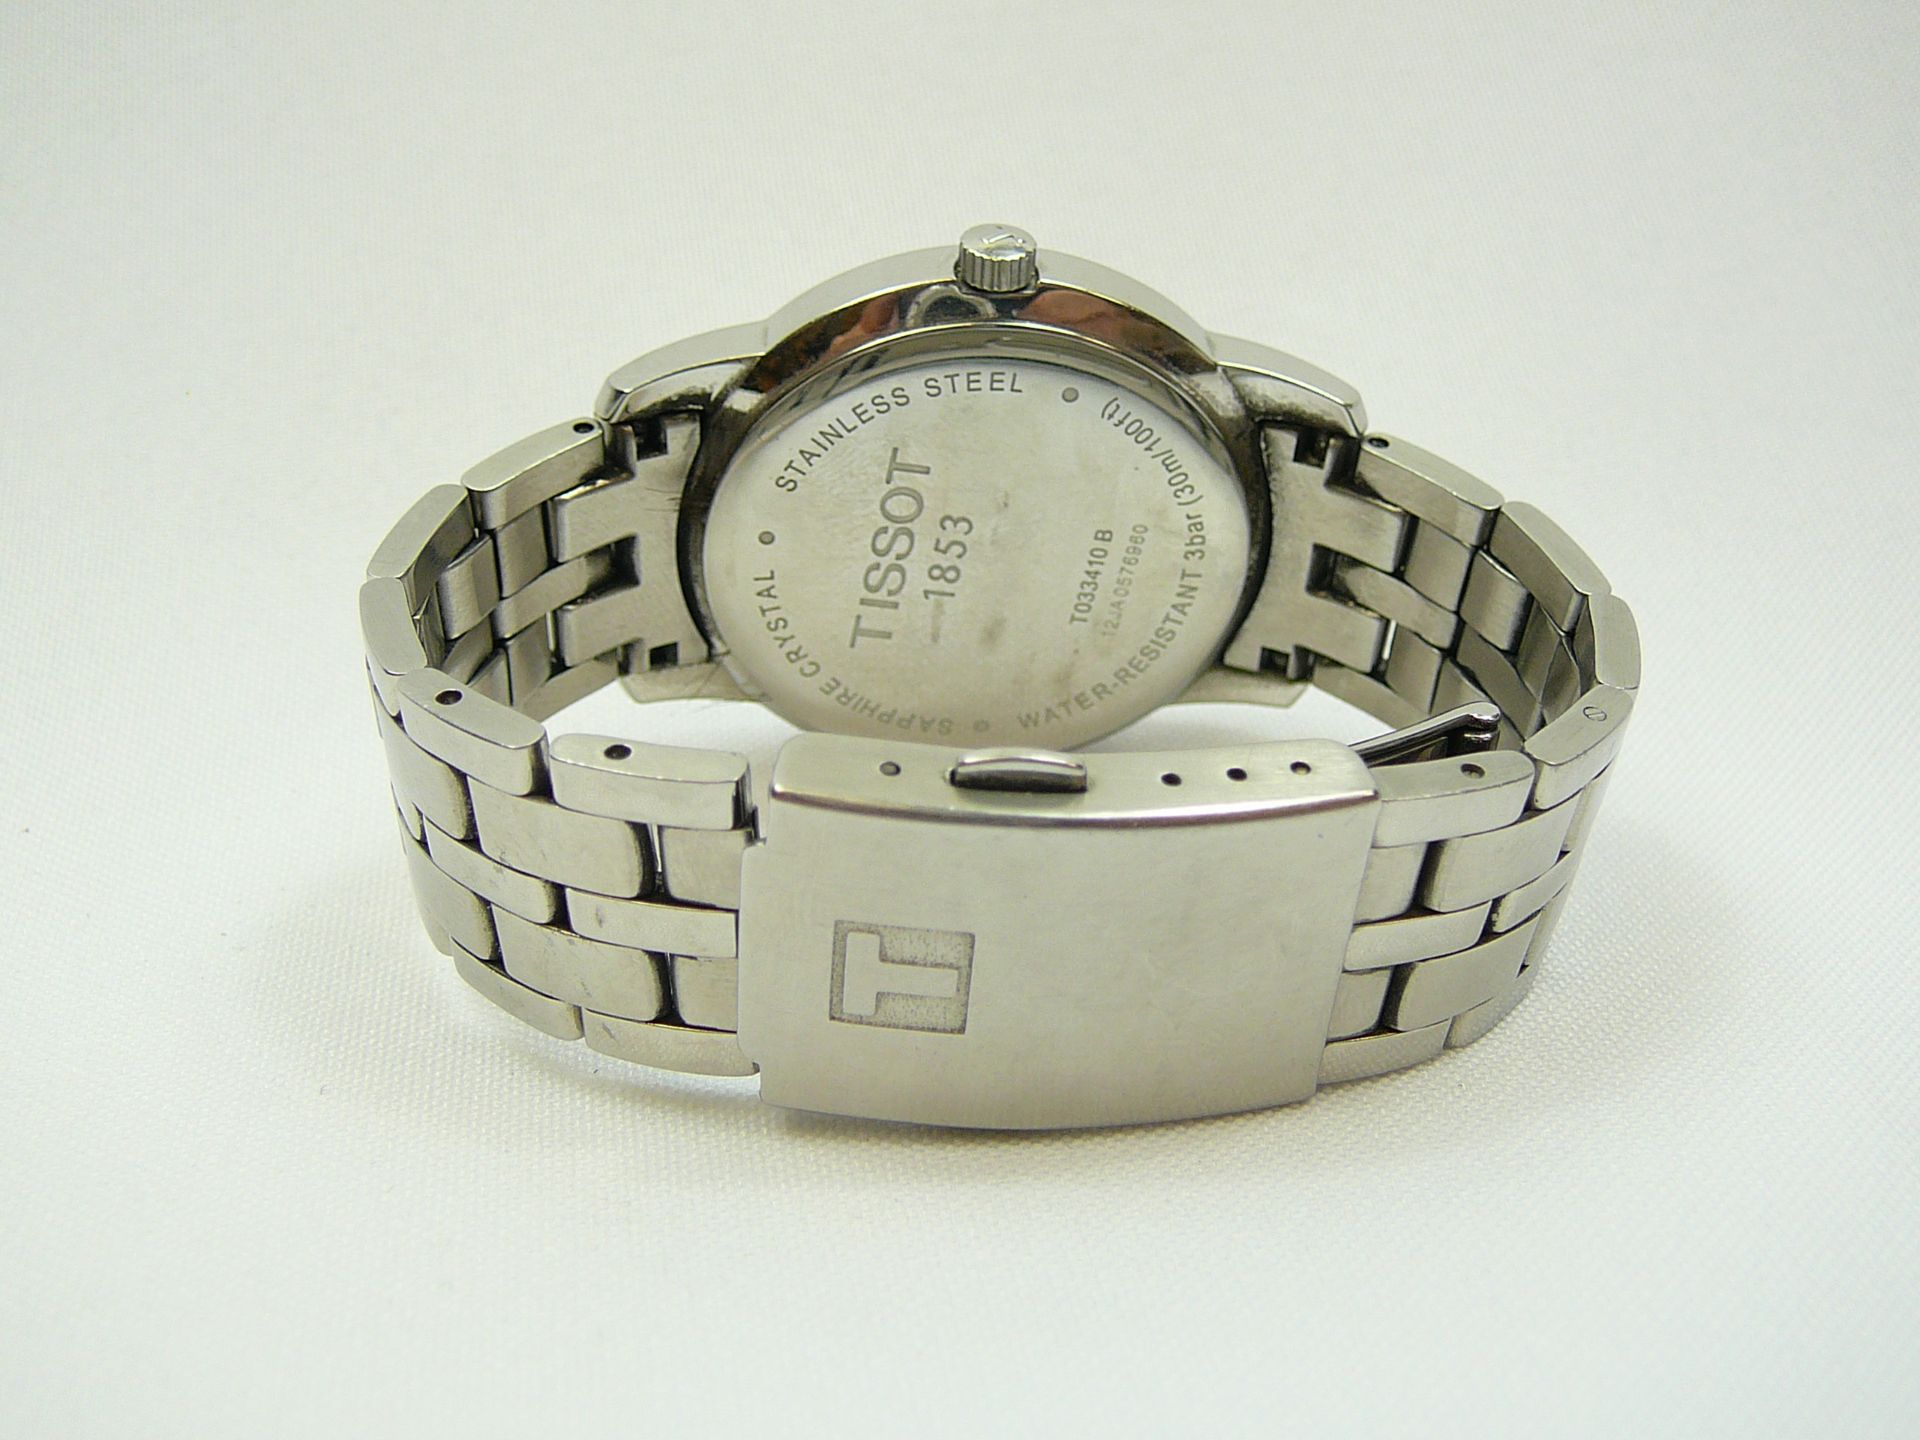 Gents Tissot Wrist Watch - Image 3 of 3